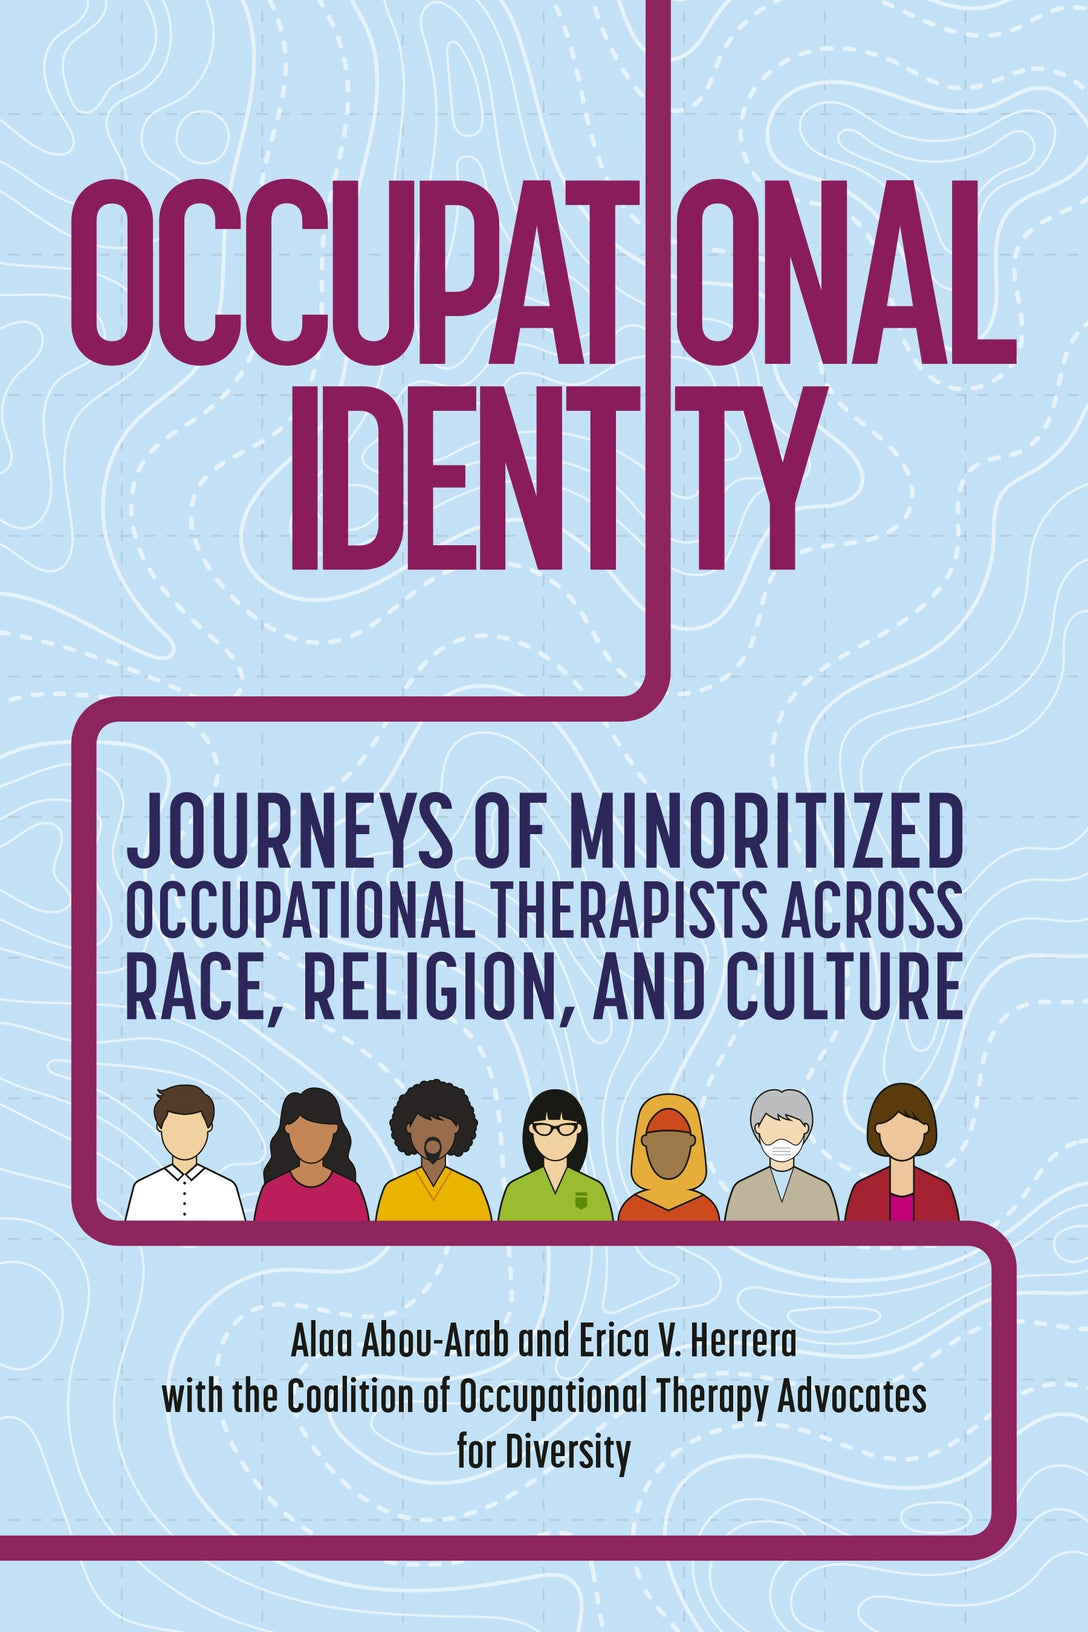 Occupational Identity by Erica V. Herrera, Alaa Abou-Arab